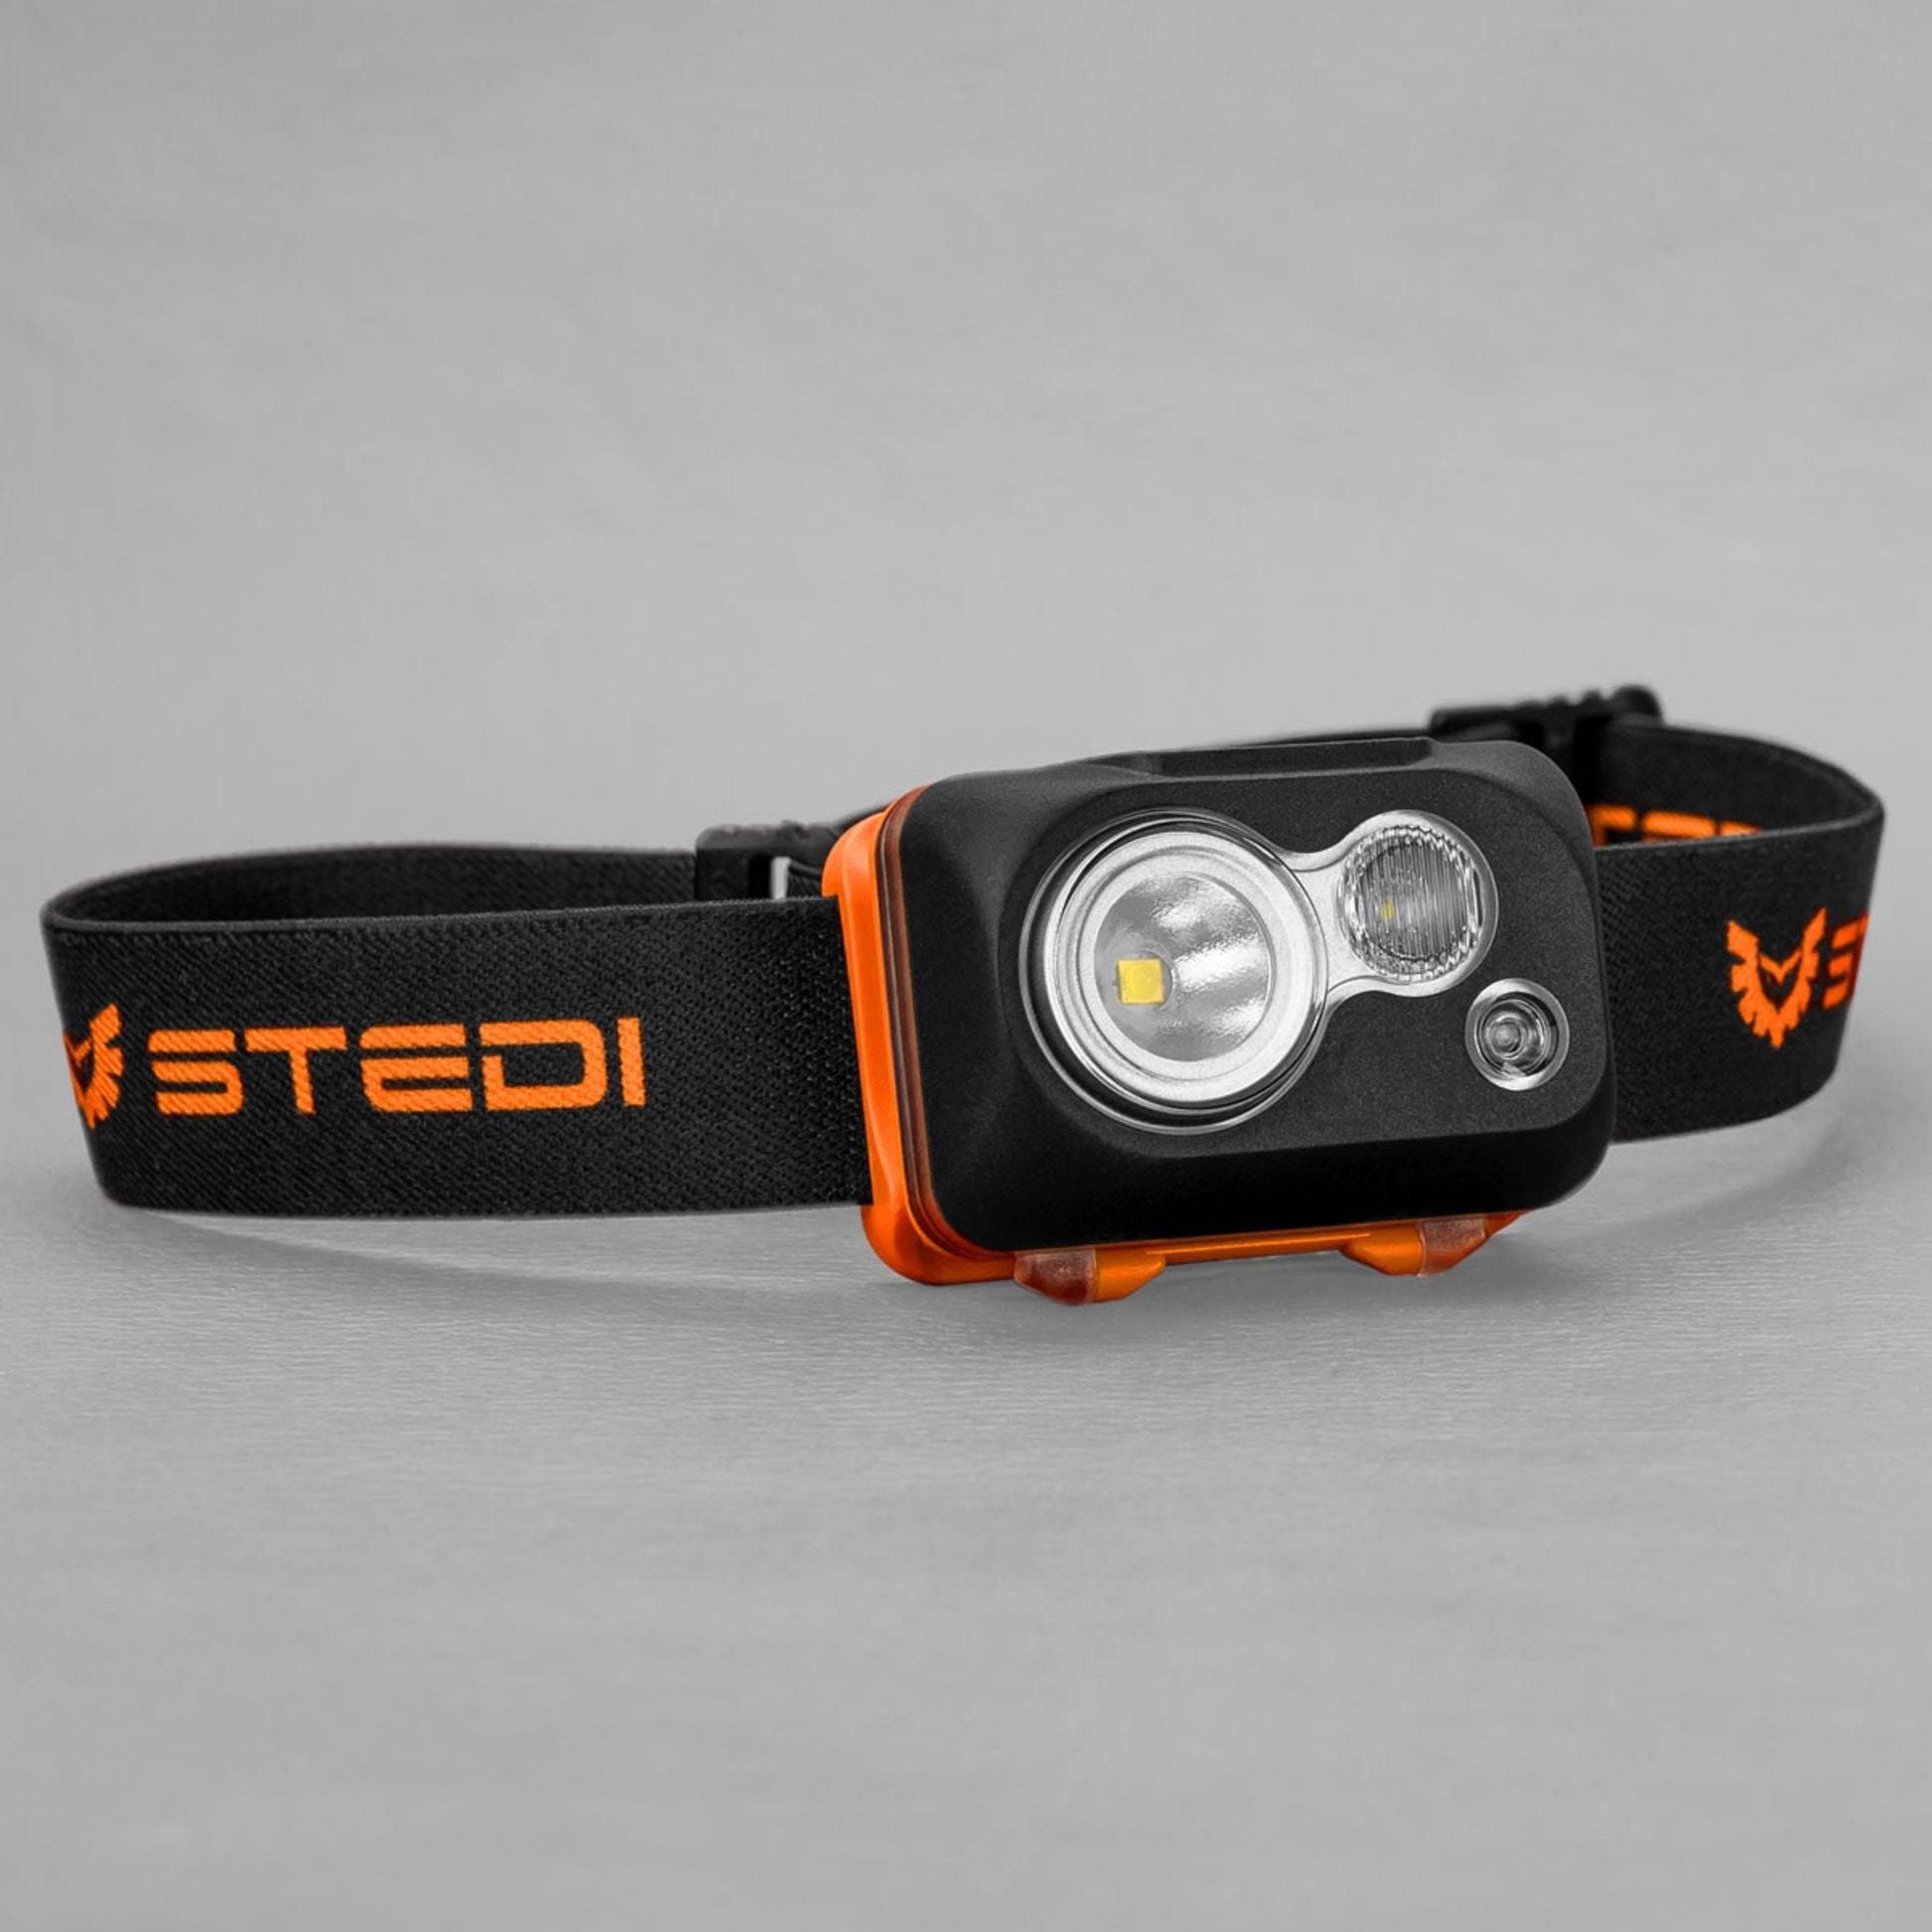 STEDI Type S LED Head Torch